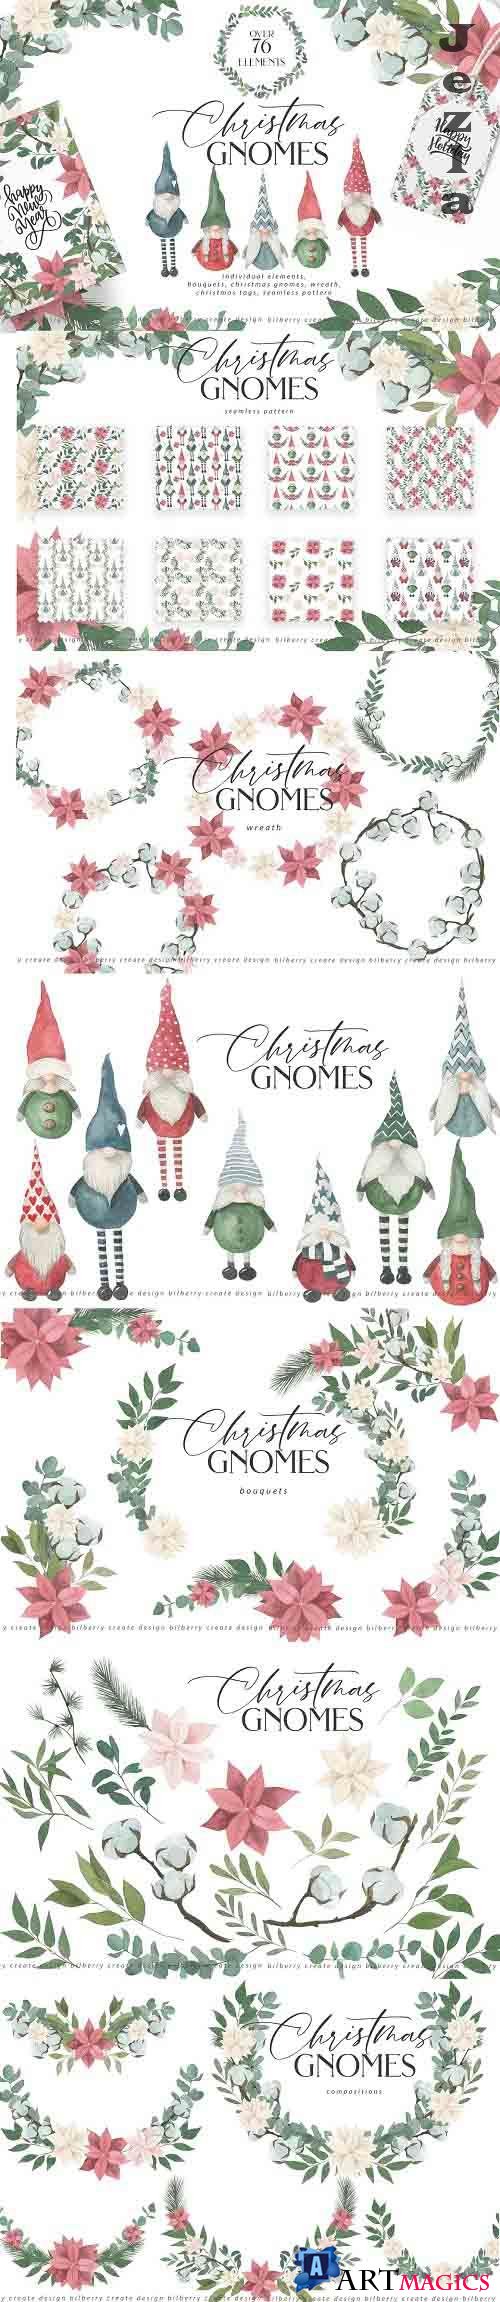 Christmas Gnomes art set - 5682492